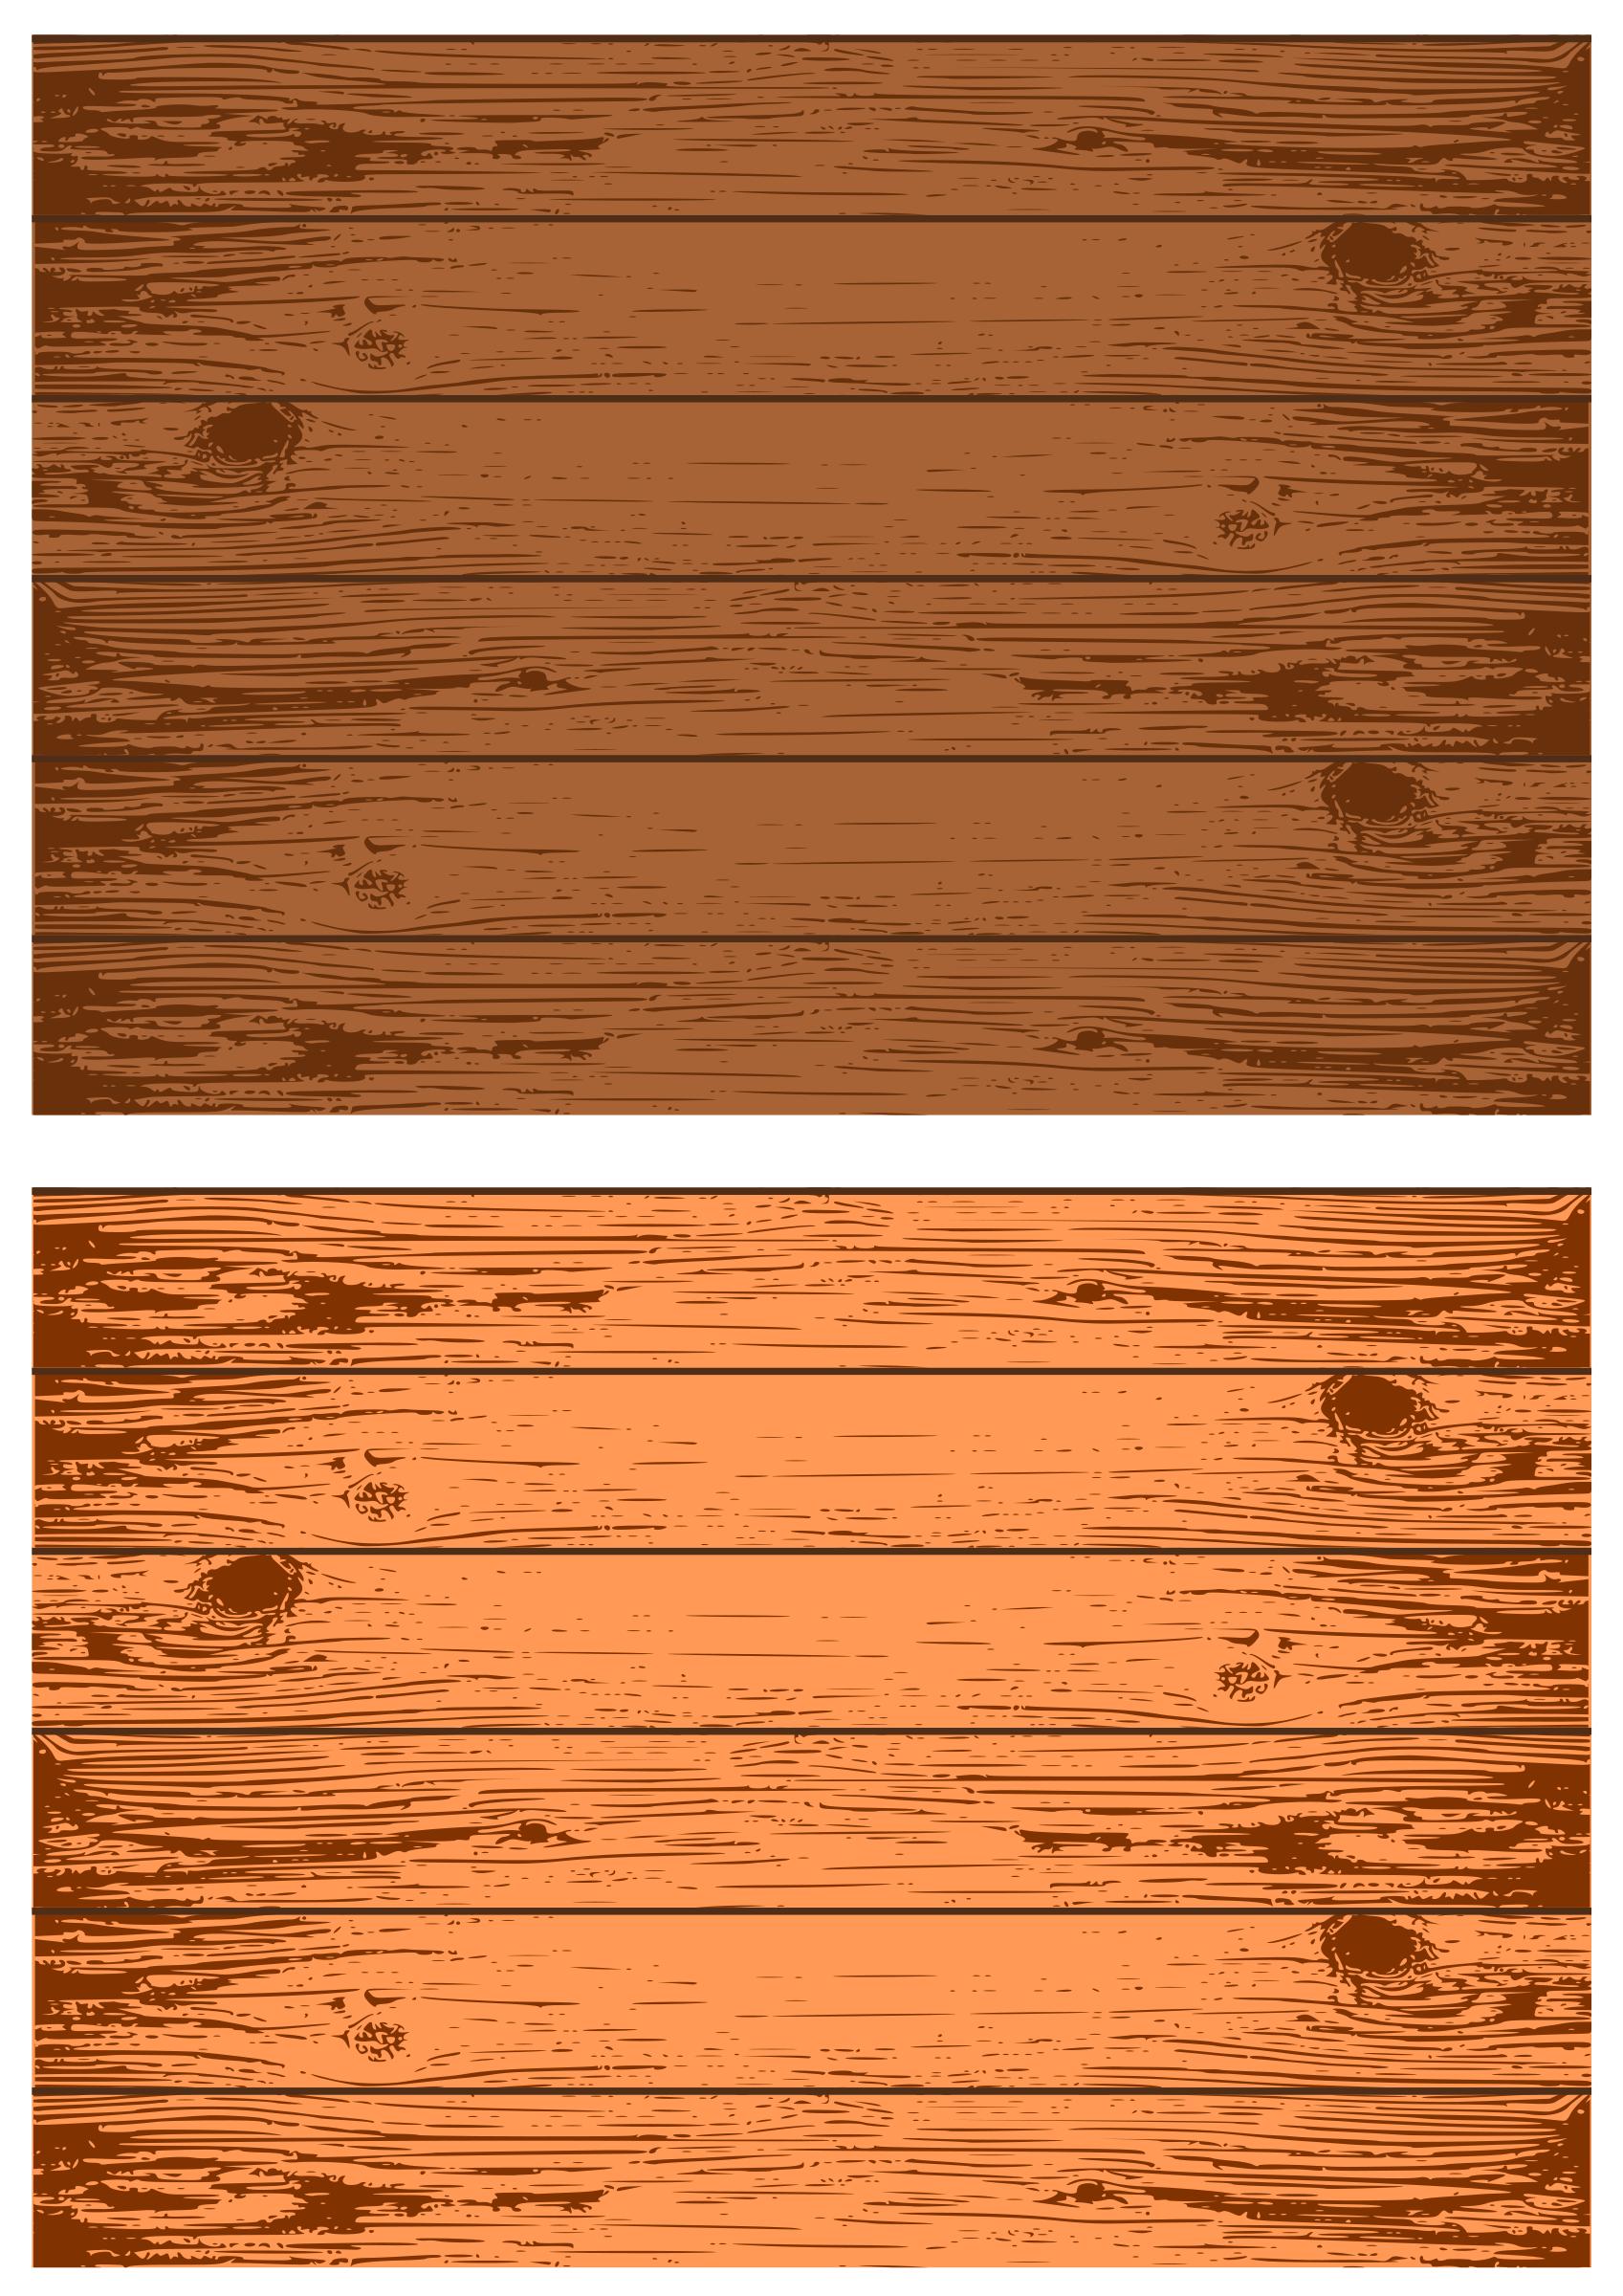 Wood grain texture icons